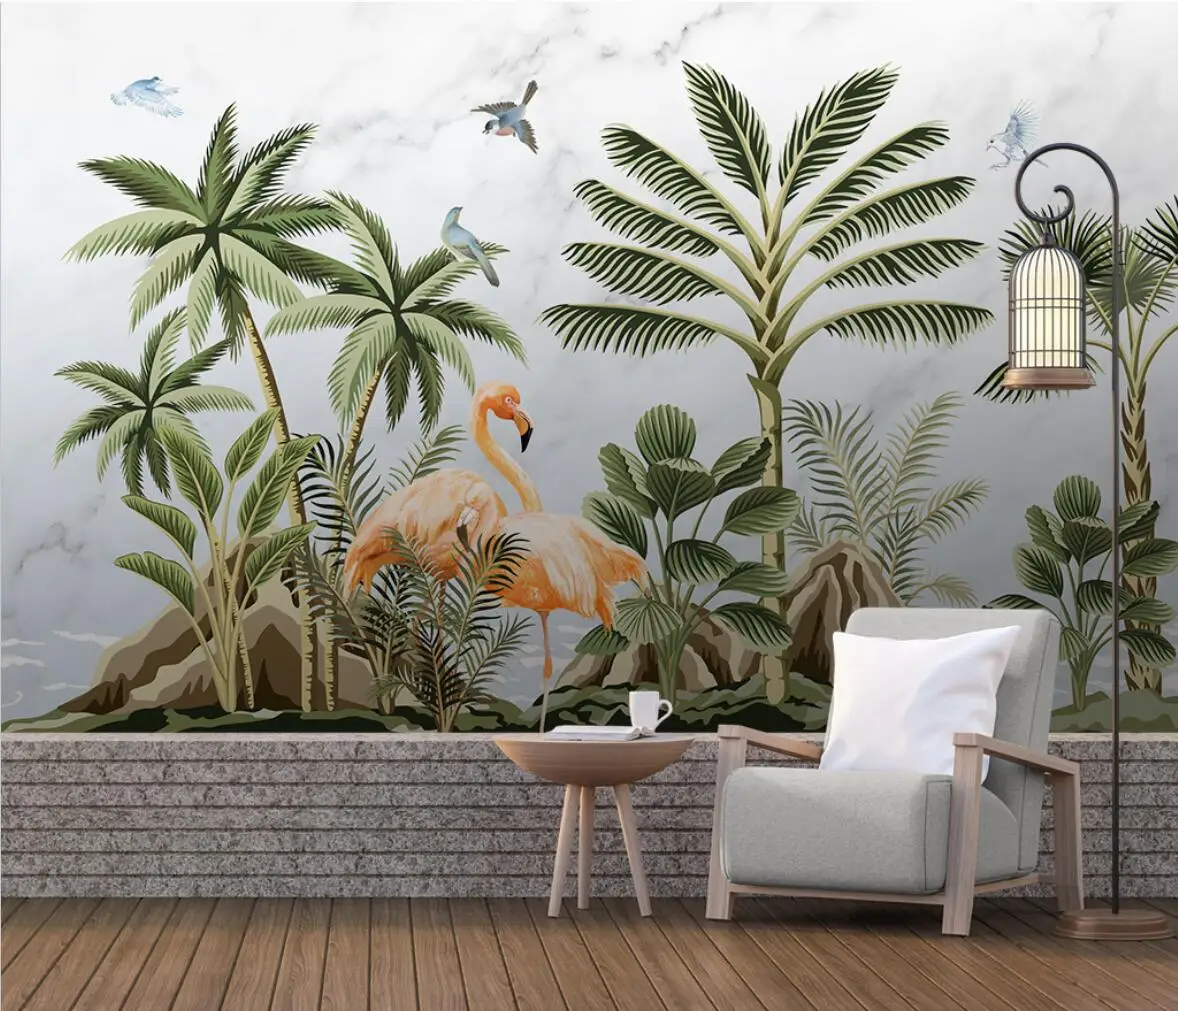 

beibehang custom Landscape Background mural Tapestry wallpapers for Living Room Bedroom Tropical plant flamingo 3d wallpaper